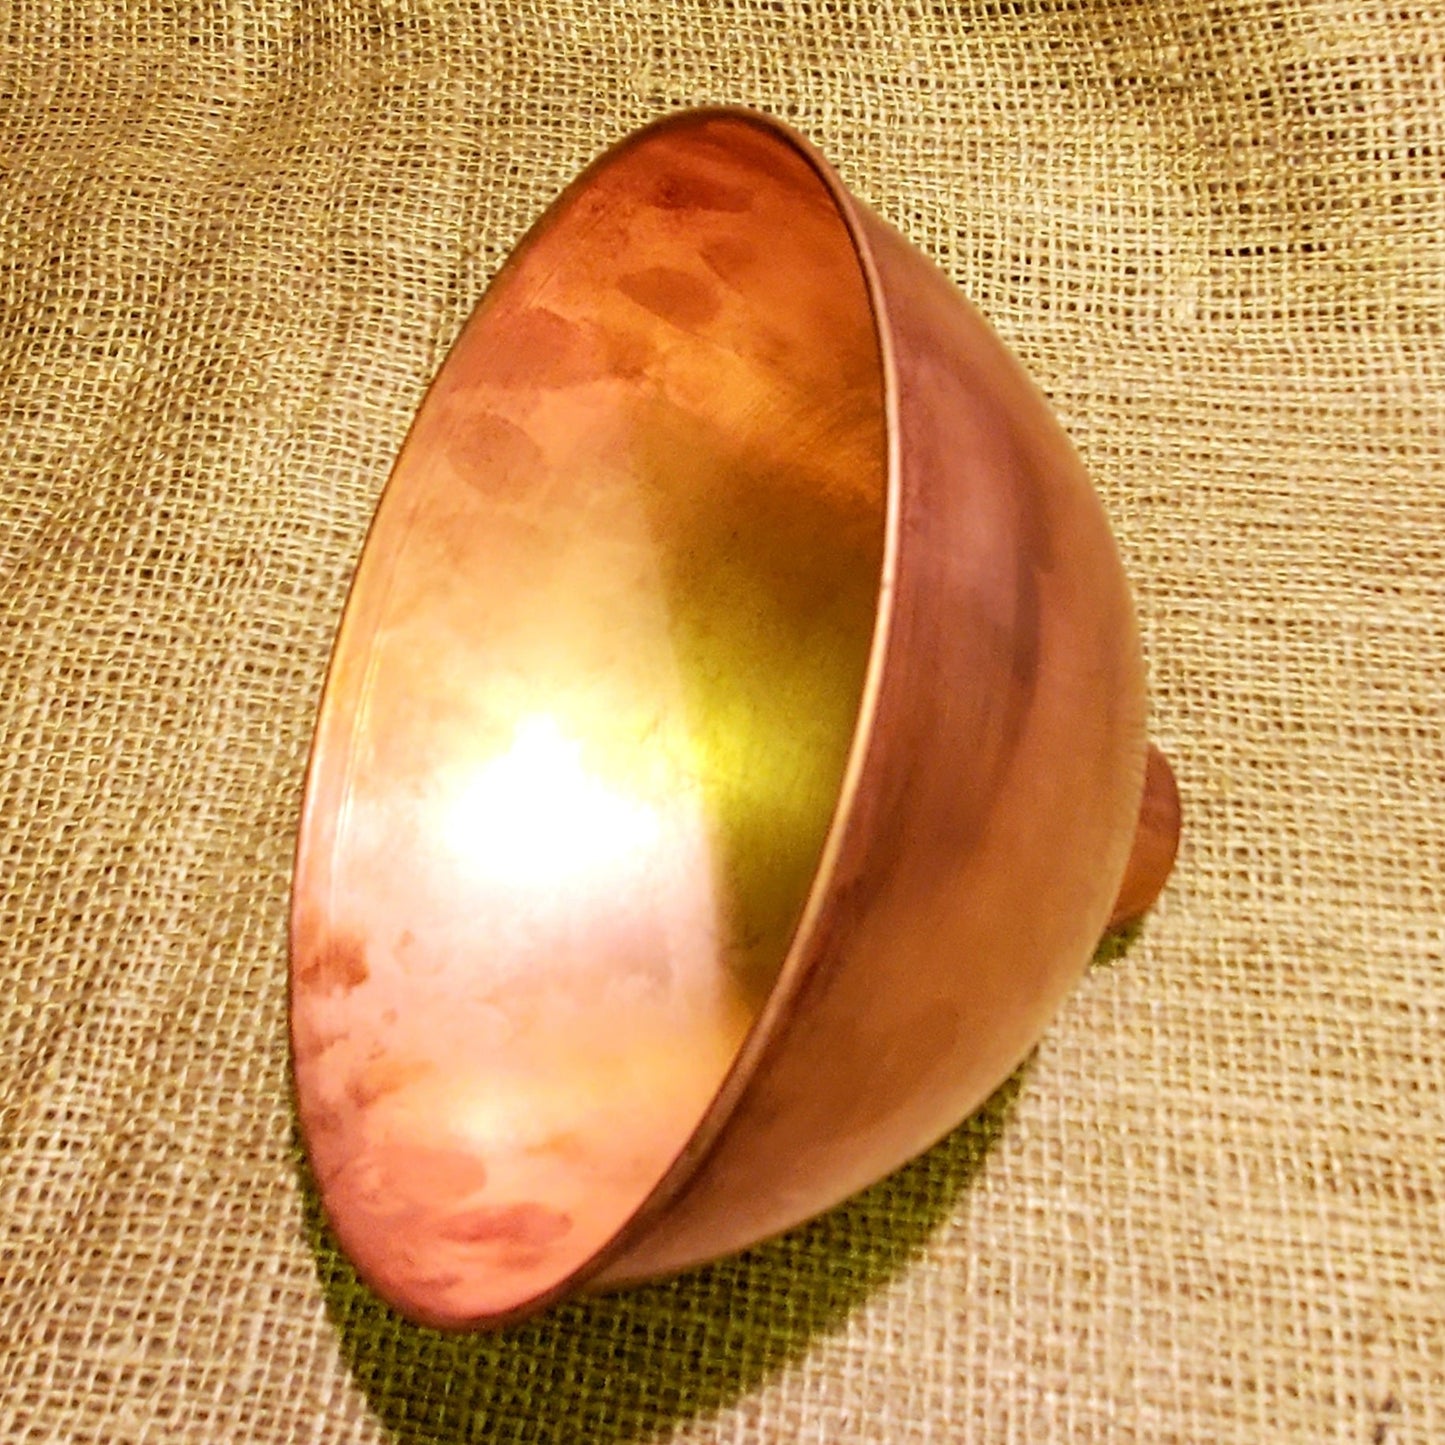 Study - 8" Pendant Lamp Shade - Polished Copper